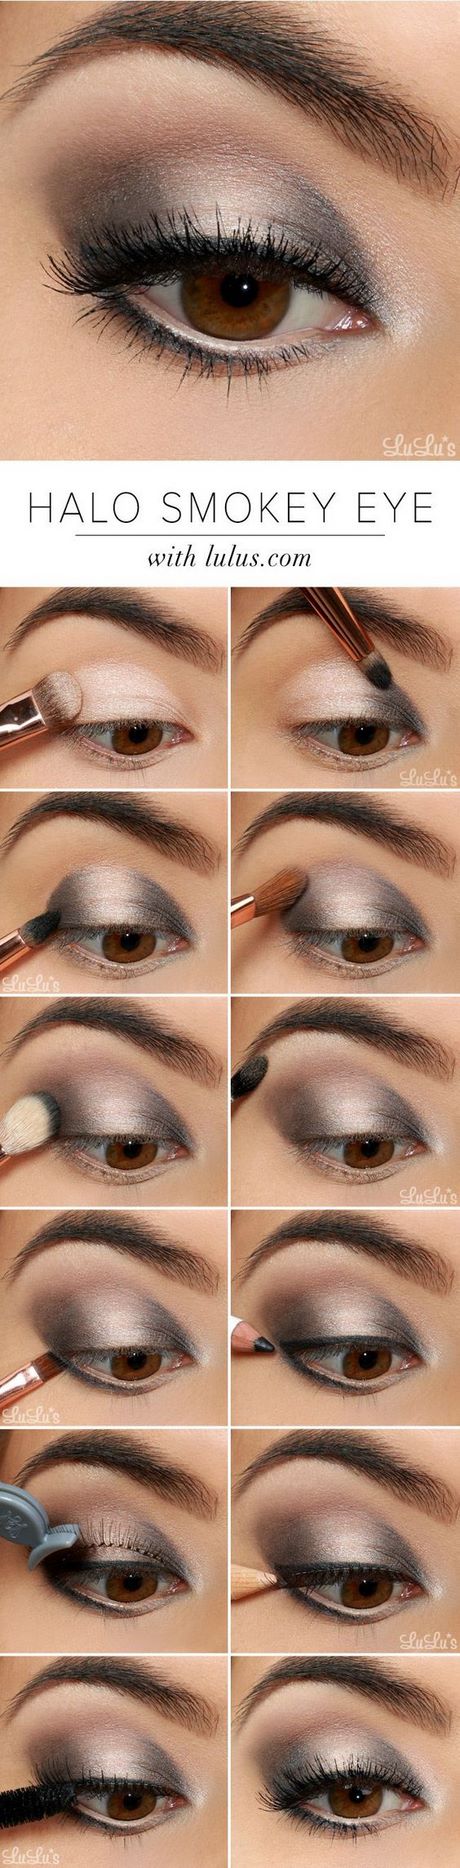 warm-smokey-eye-makeup-tutorial-69 Warm smokey eye make-up tutorial